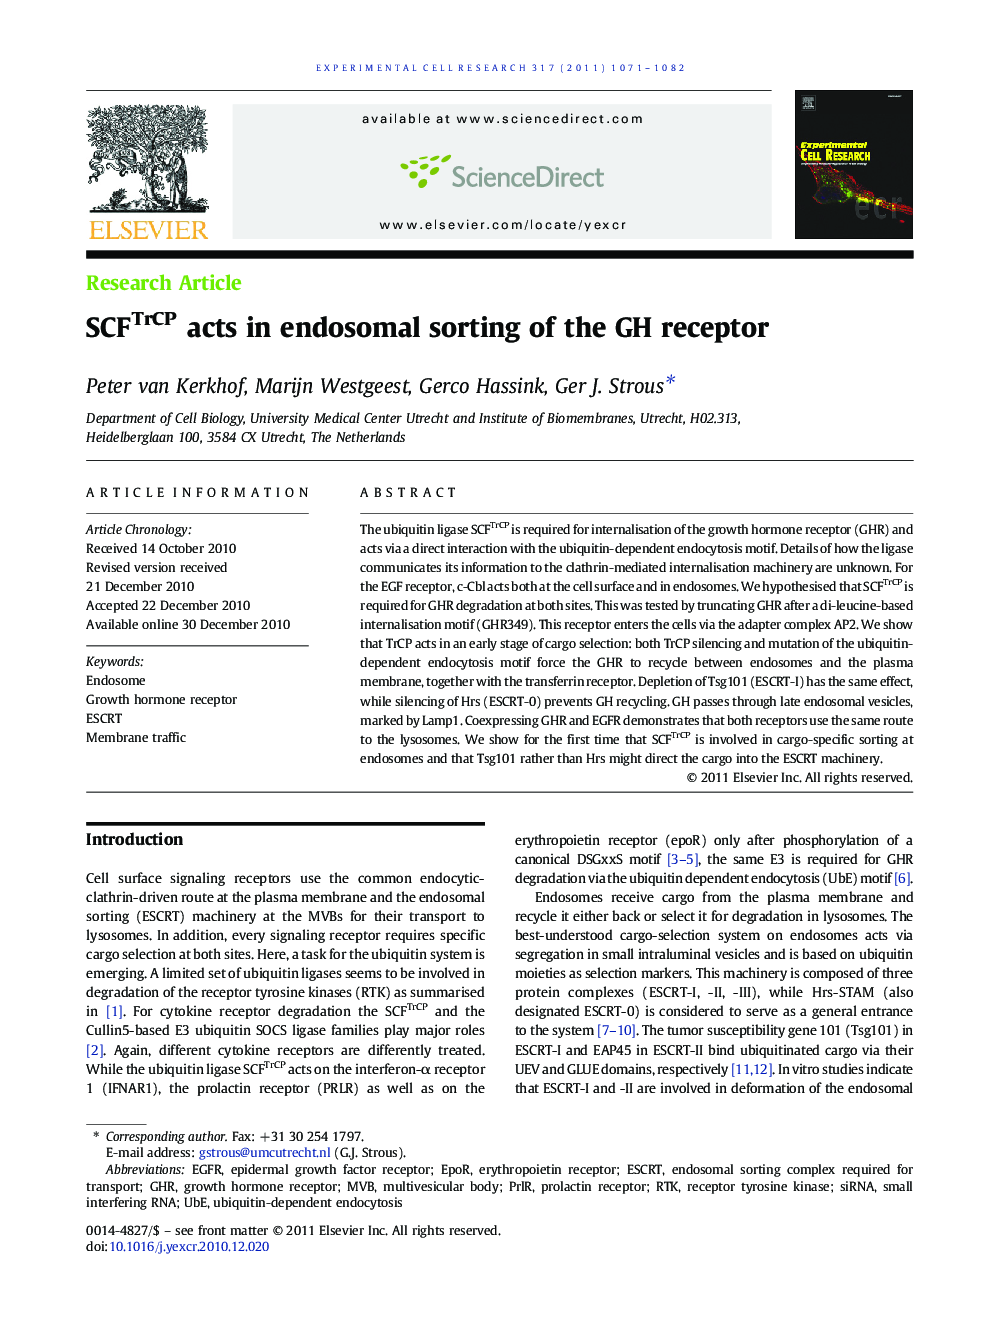 SCFTrCP acts in endosomal sorting of the GH receptor